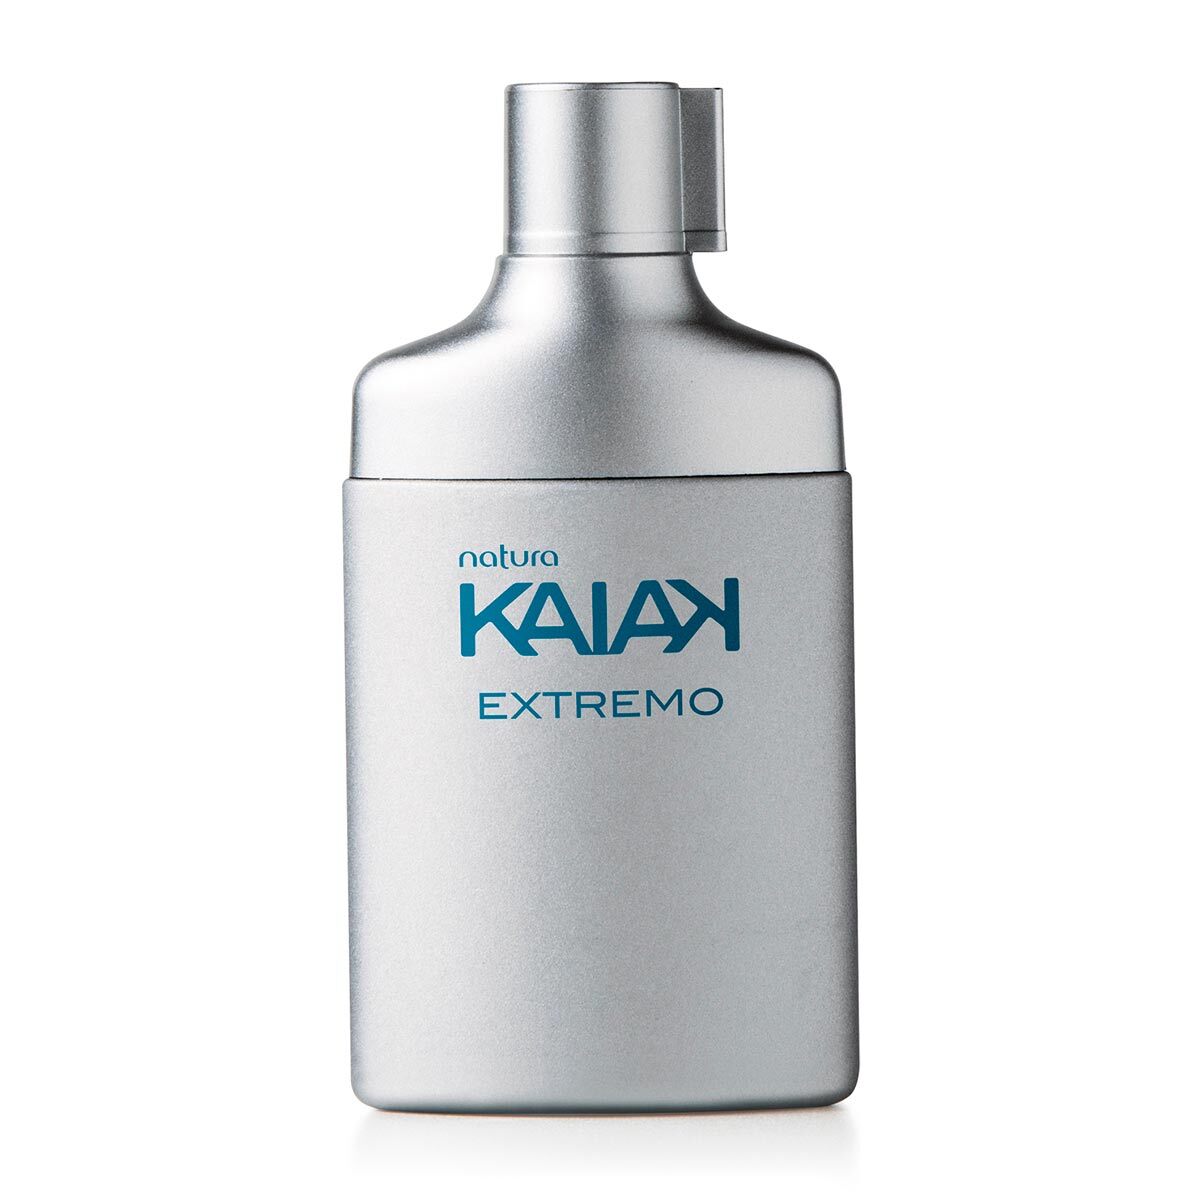 Natura KAIAK Miniatura Extremo / Miniature Extreme Deodorant Cologne - 25 Ml